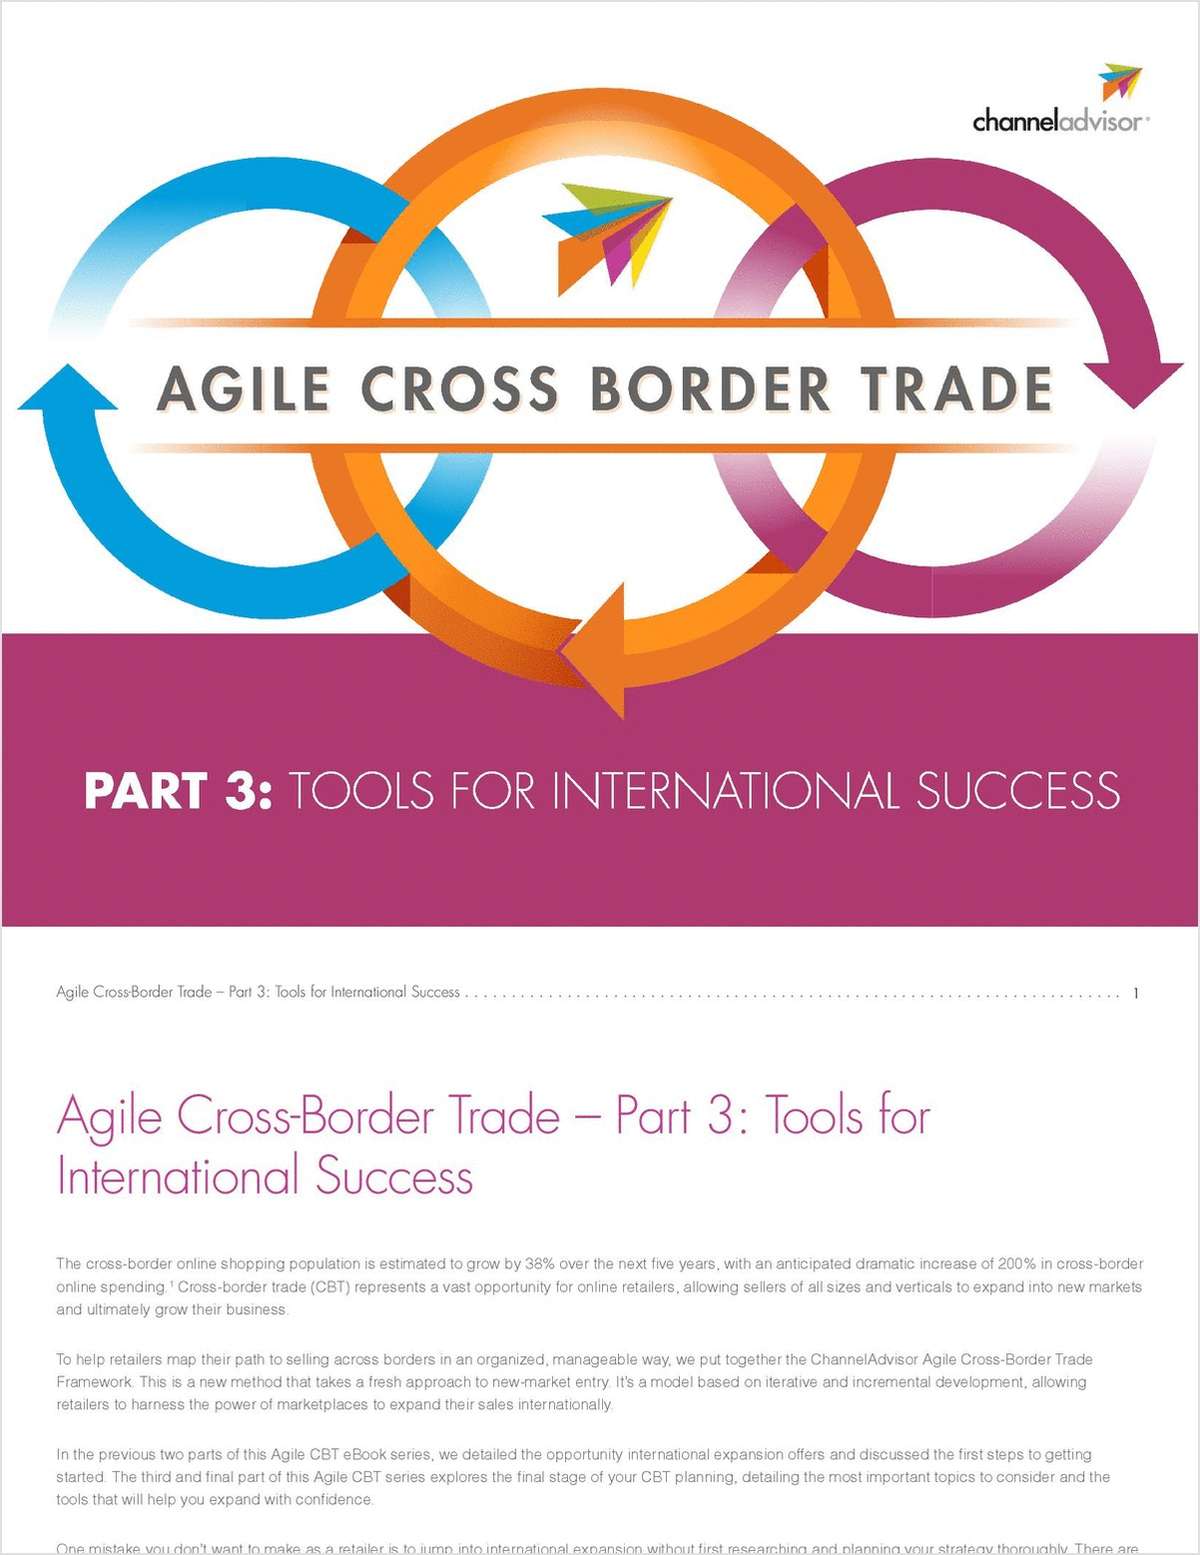 Agile Cross-Border Trade - Part 3: Tools for International Success